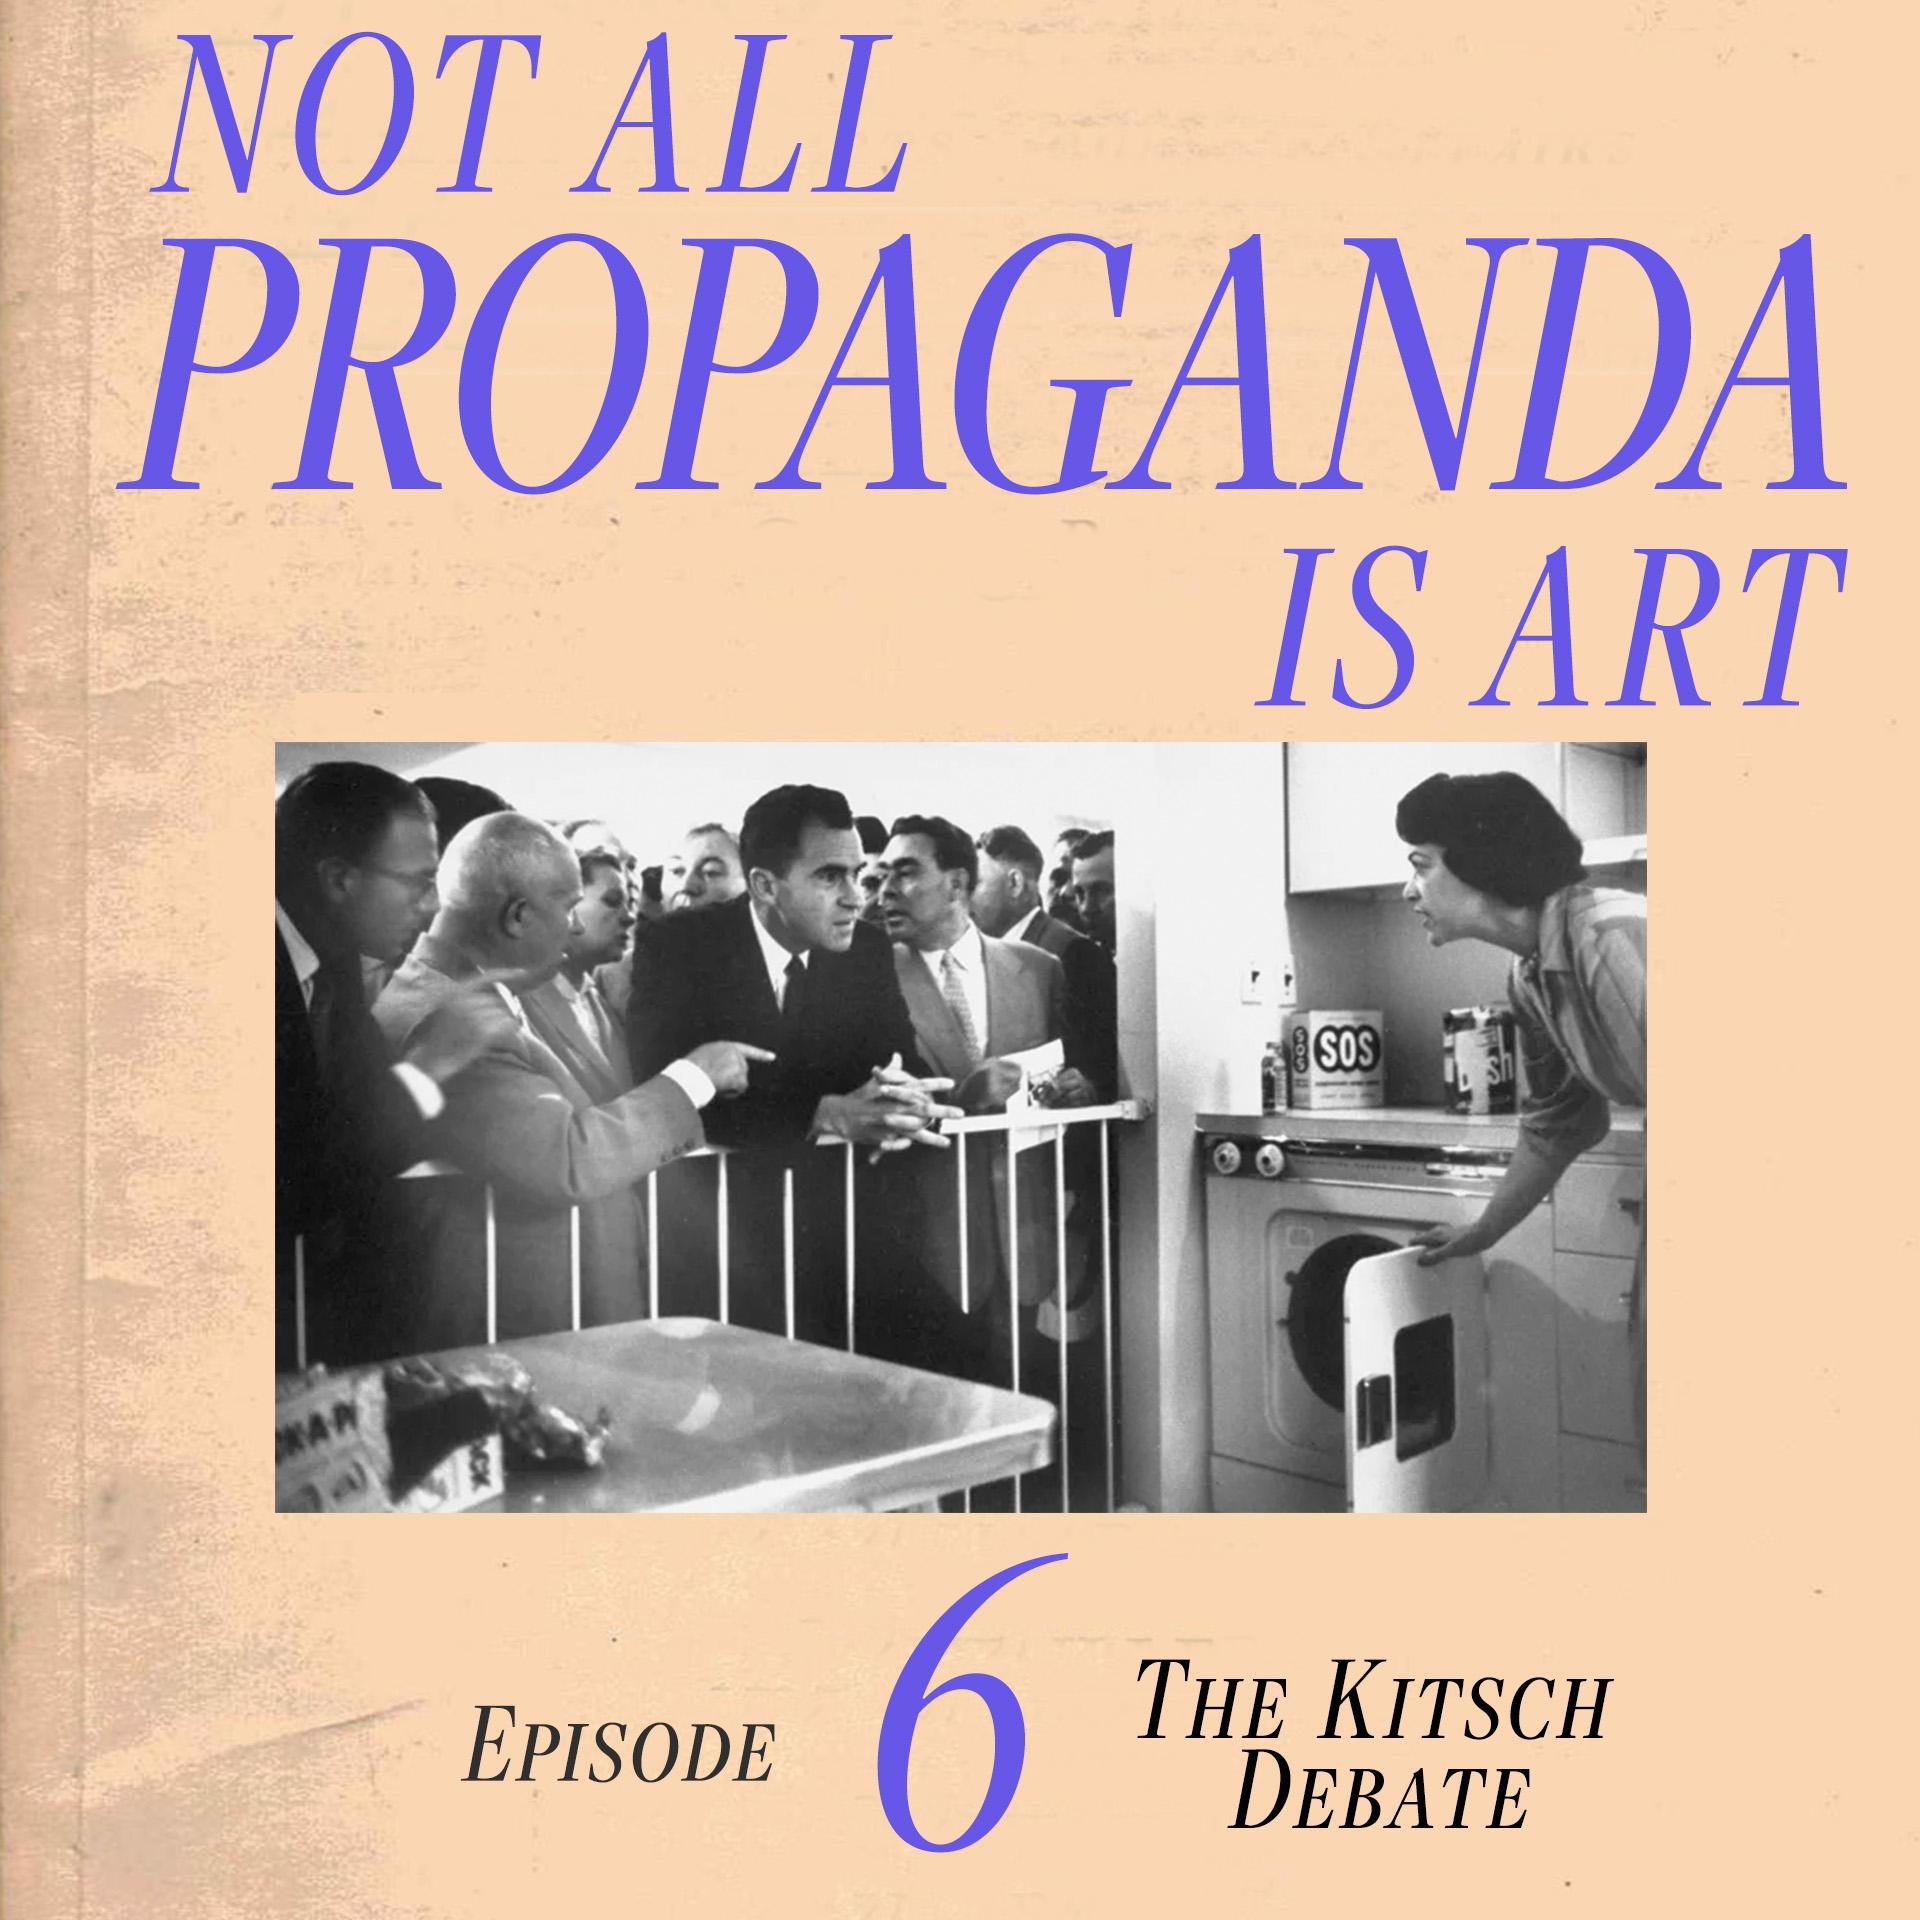 Thumbnail for "Not All Propaganda is Art 6: The Kitsch Debate".